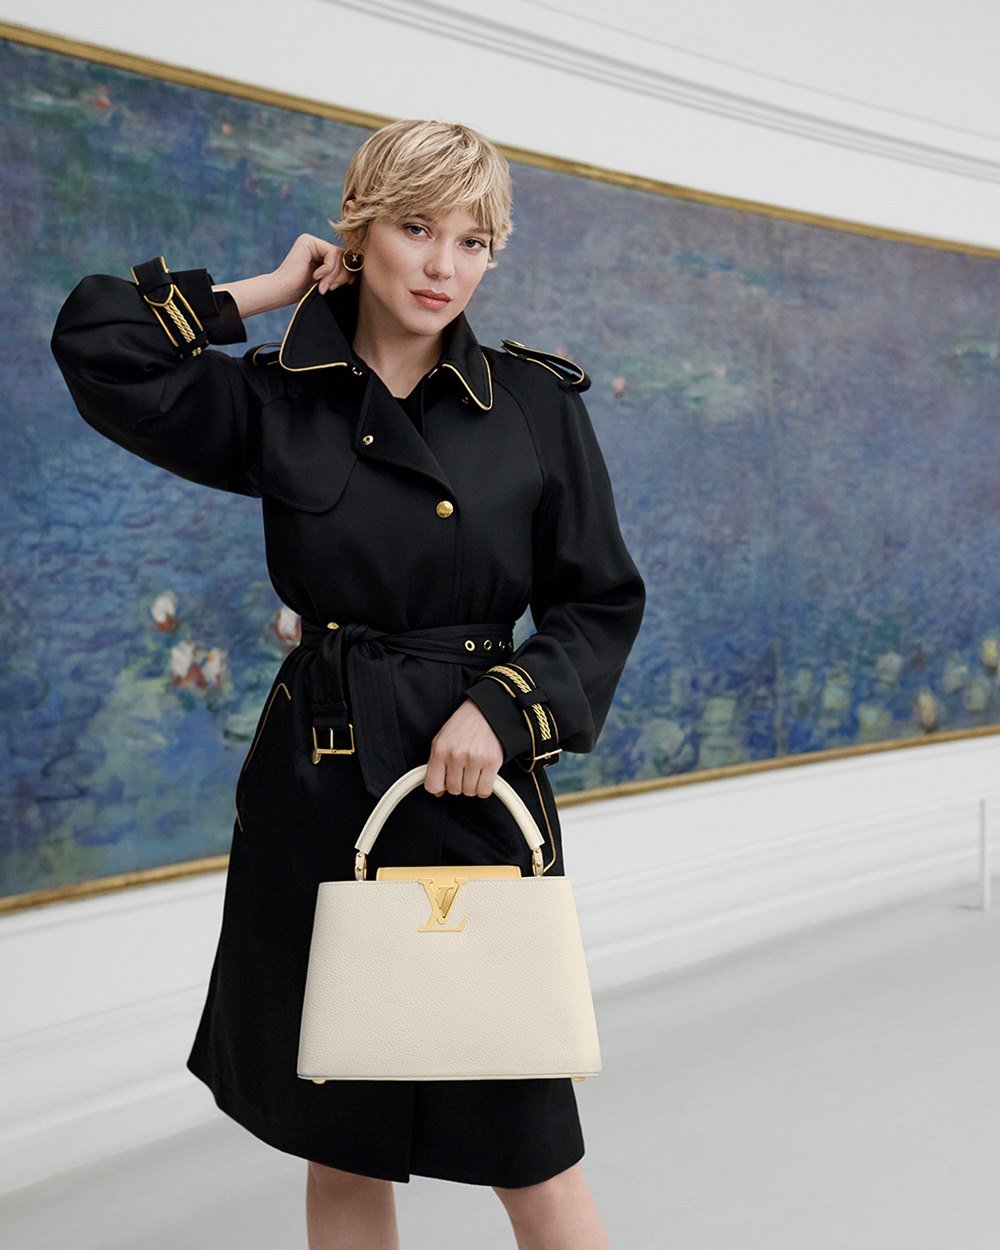 Louis Vuitton acusado de usar sin permiso obras de Joan Mitchell